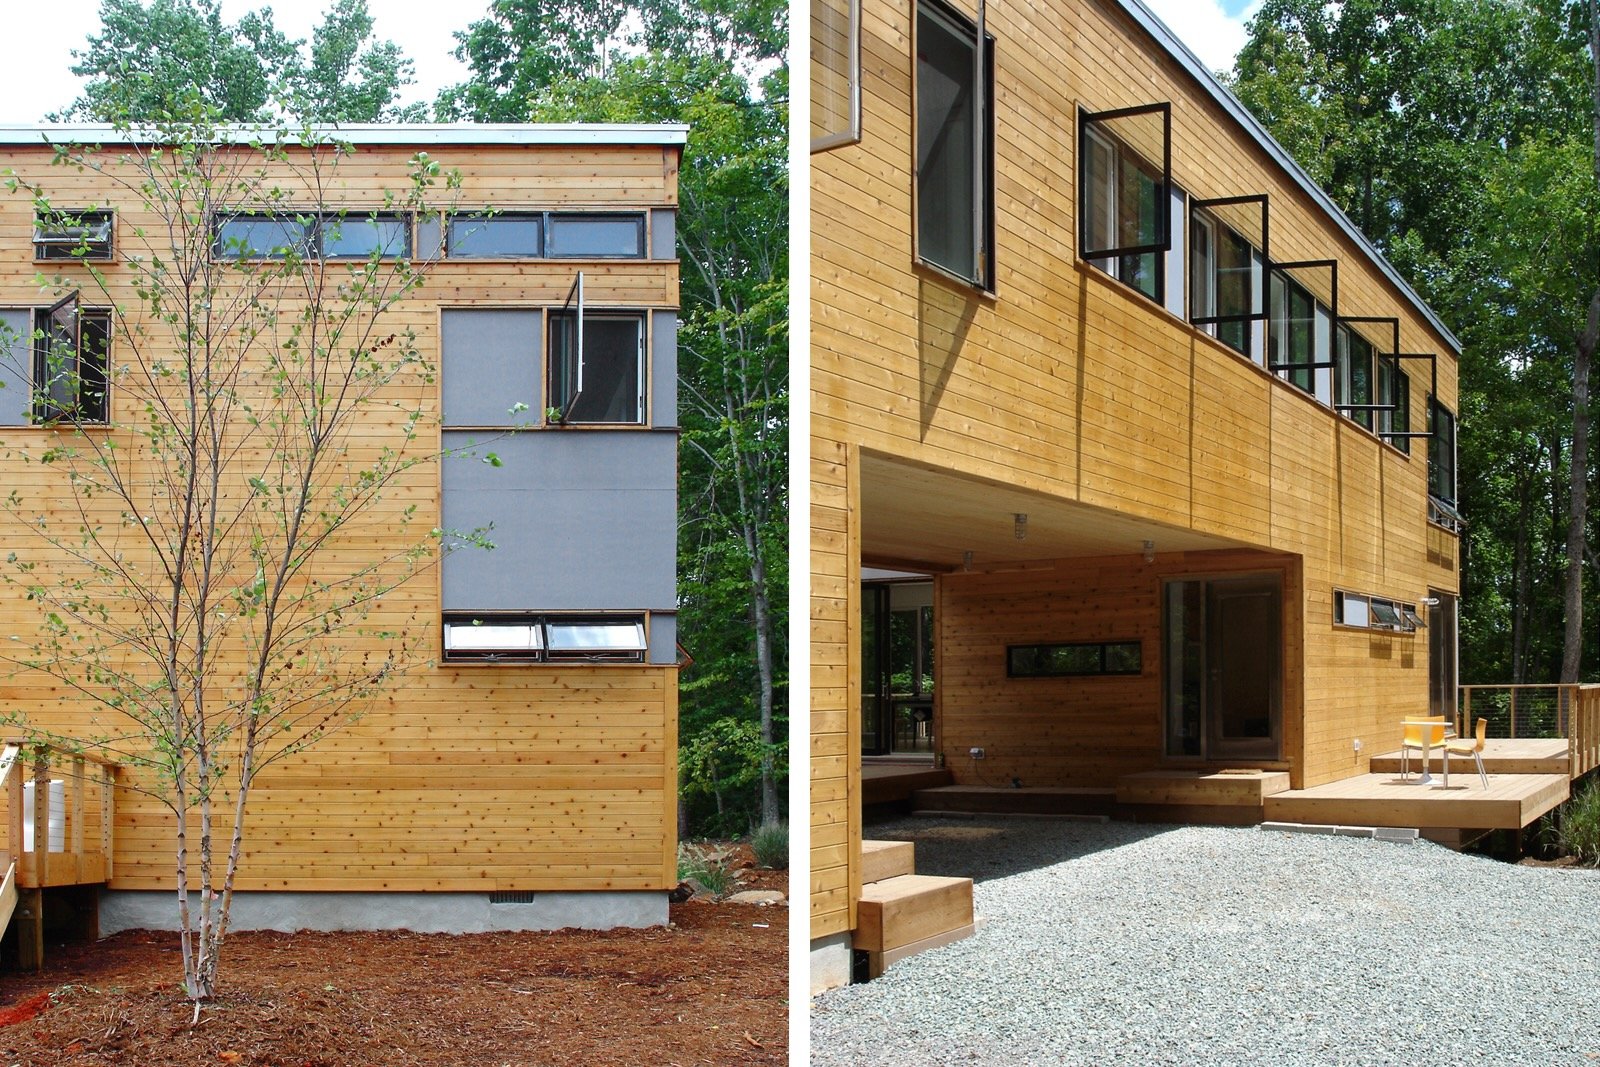 09-res4-resolution-4-architecture-modern-modular-prefab-home-dwell-exterior.jpeg